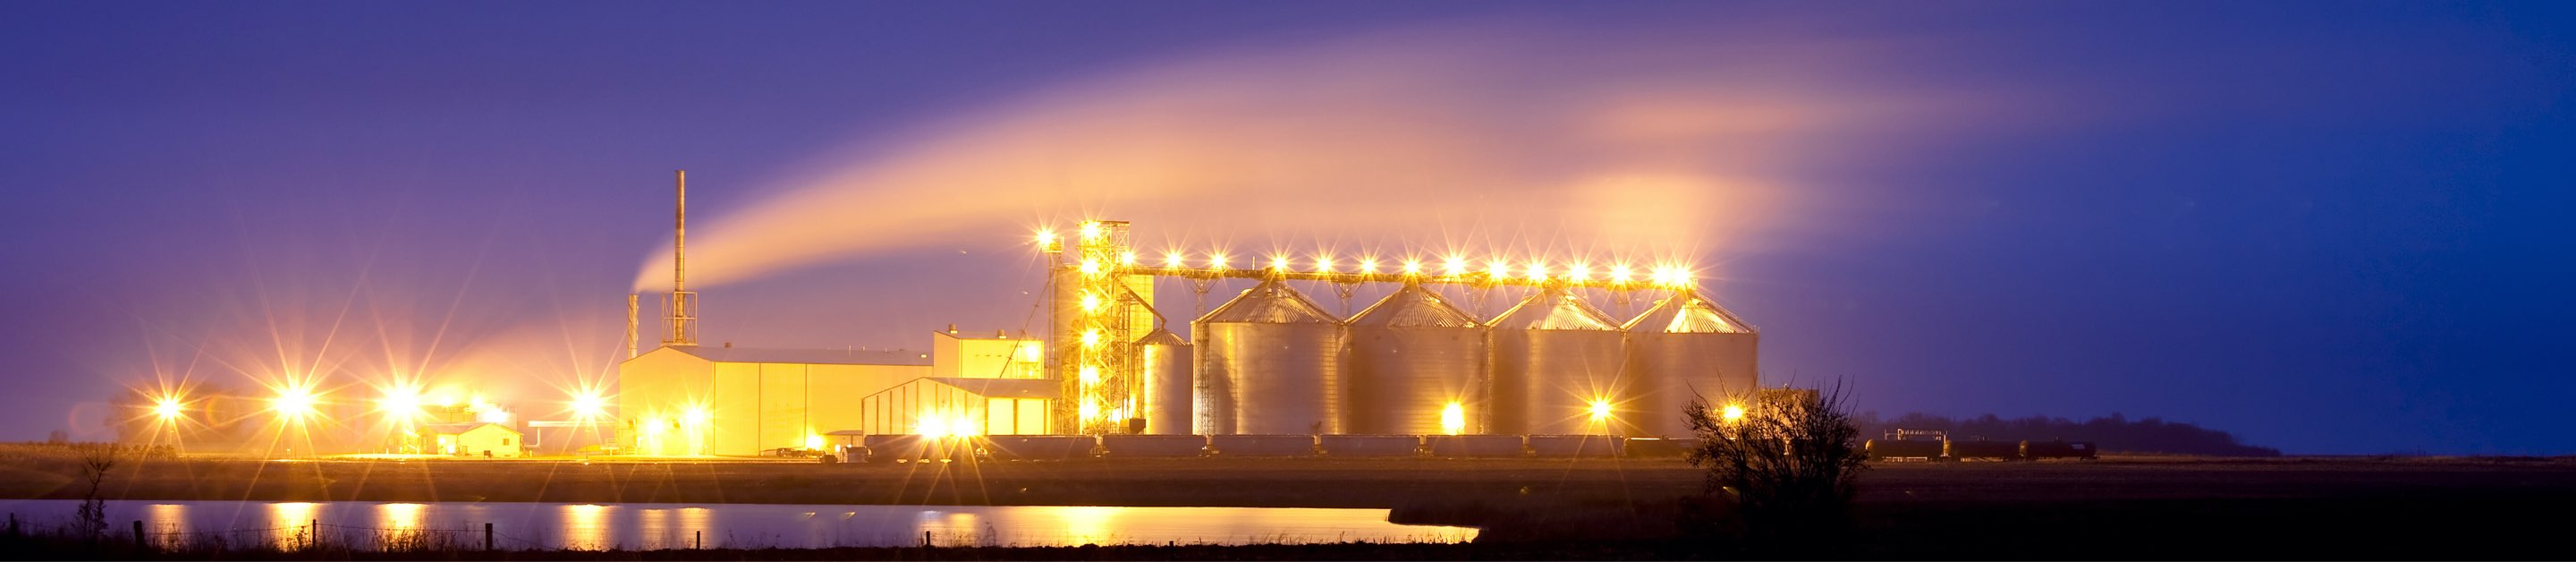 KS-Corn-Building-Markets-Ethanol-featured-image